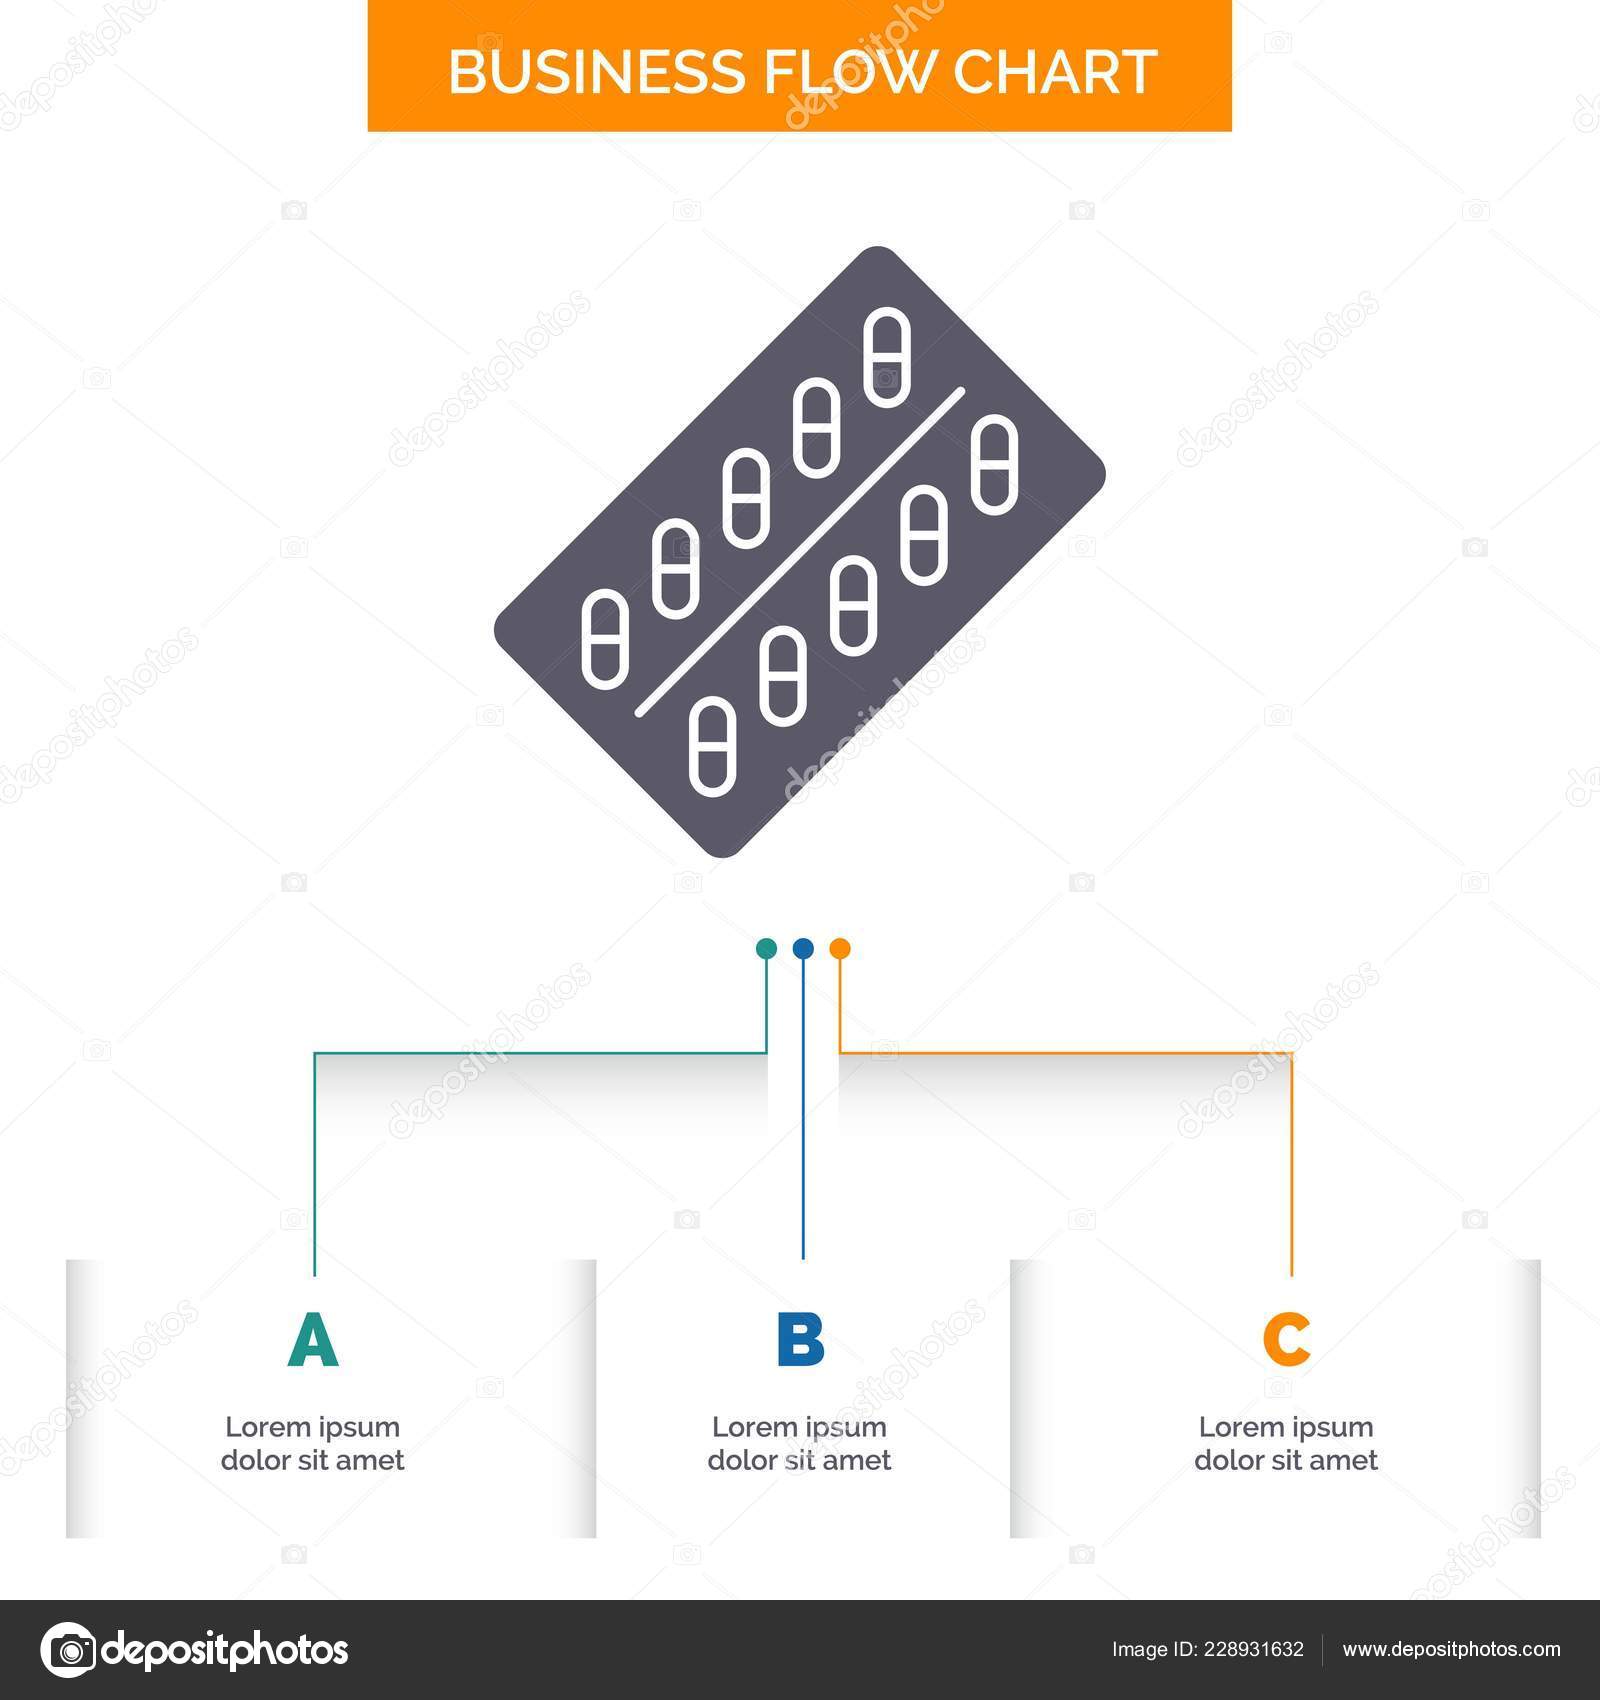 Business Flow Chart Template